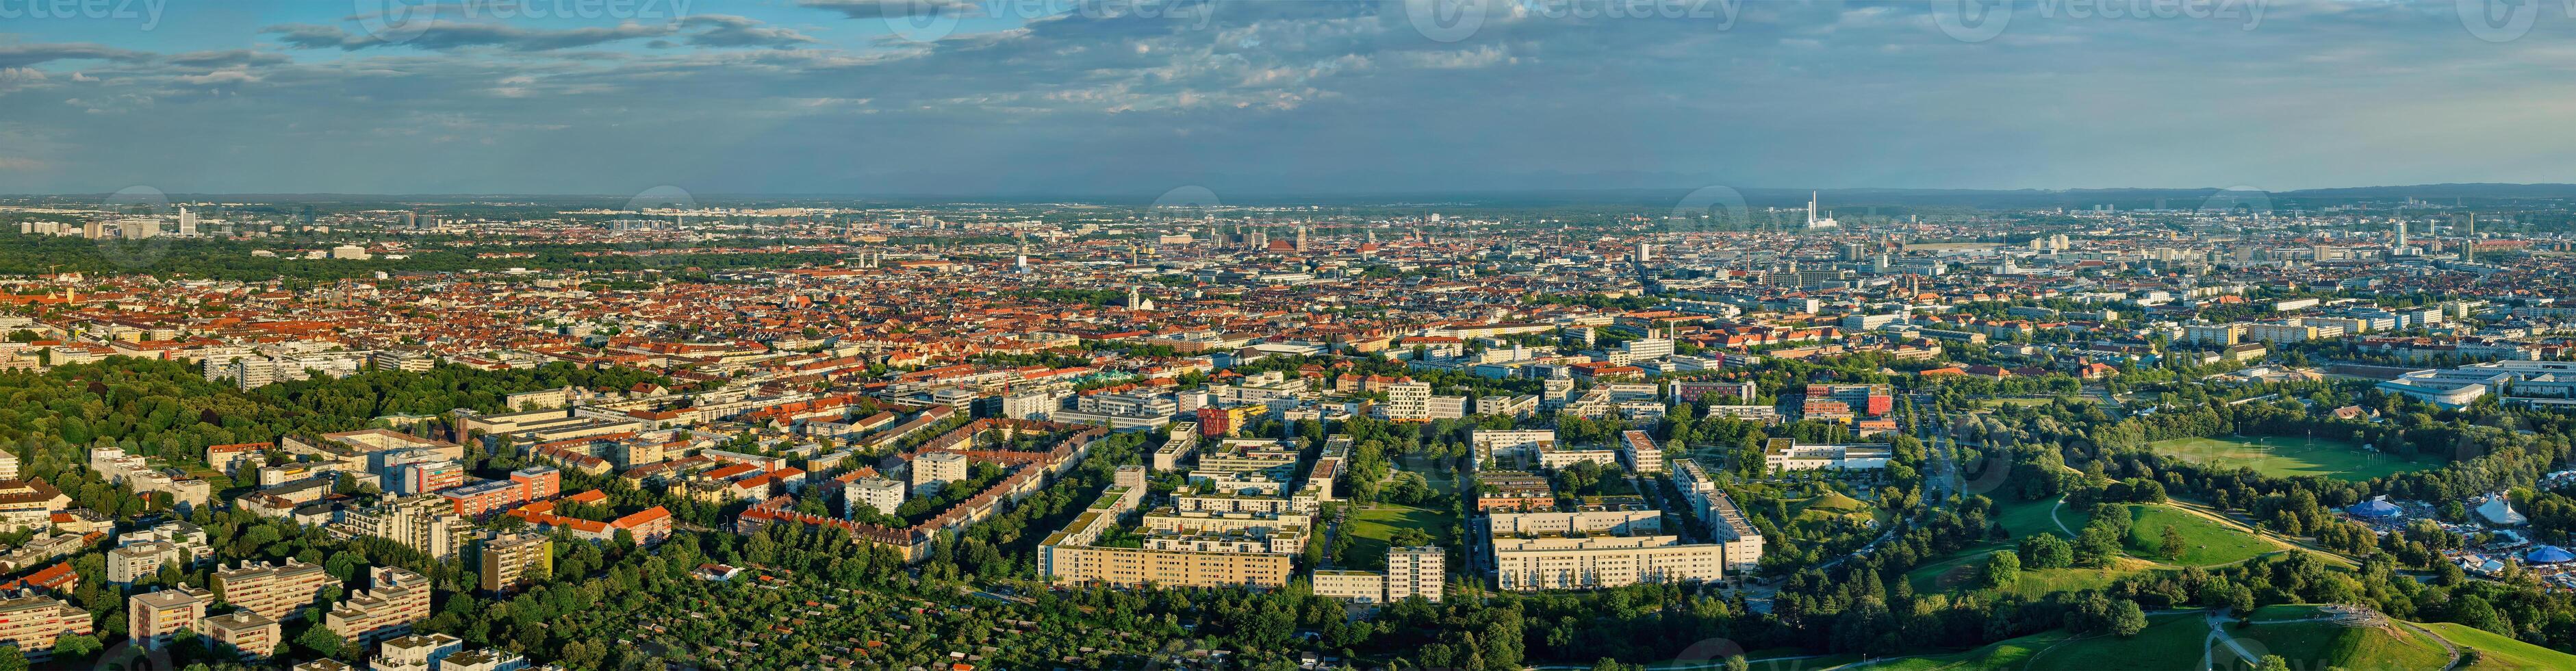 Aerial panorama of Munich. Munich, Bavaria, Germany photo